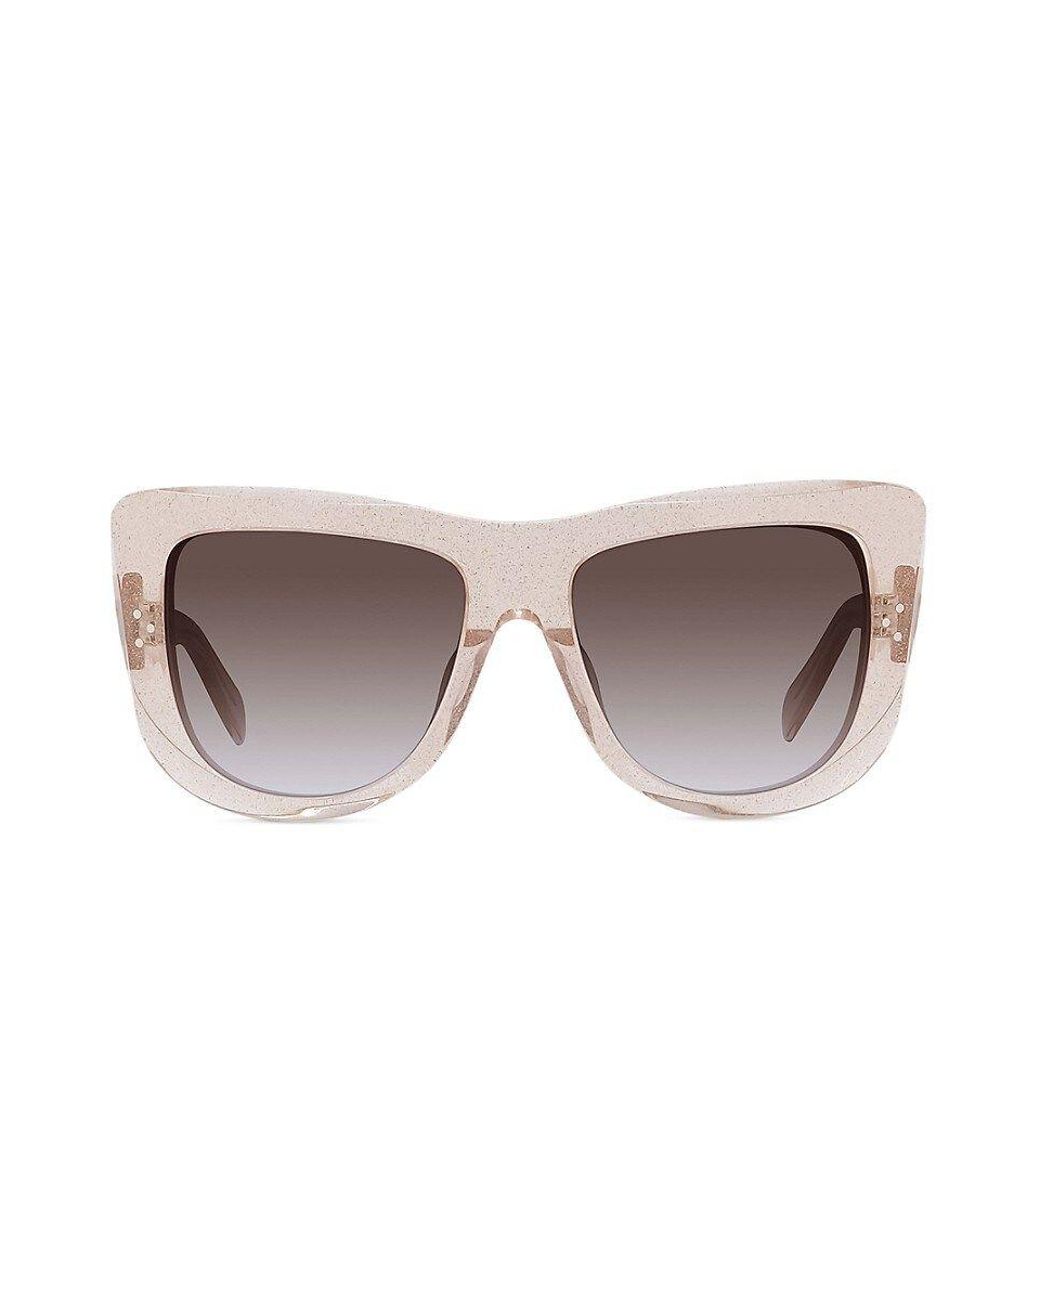 Celine 57mm Glitter Square Sunglasses in Pink | Lyst